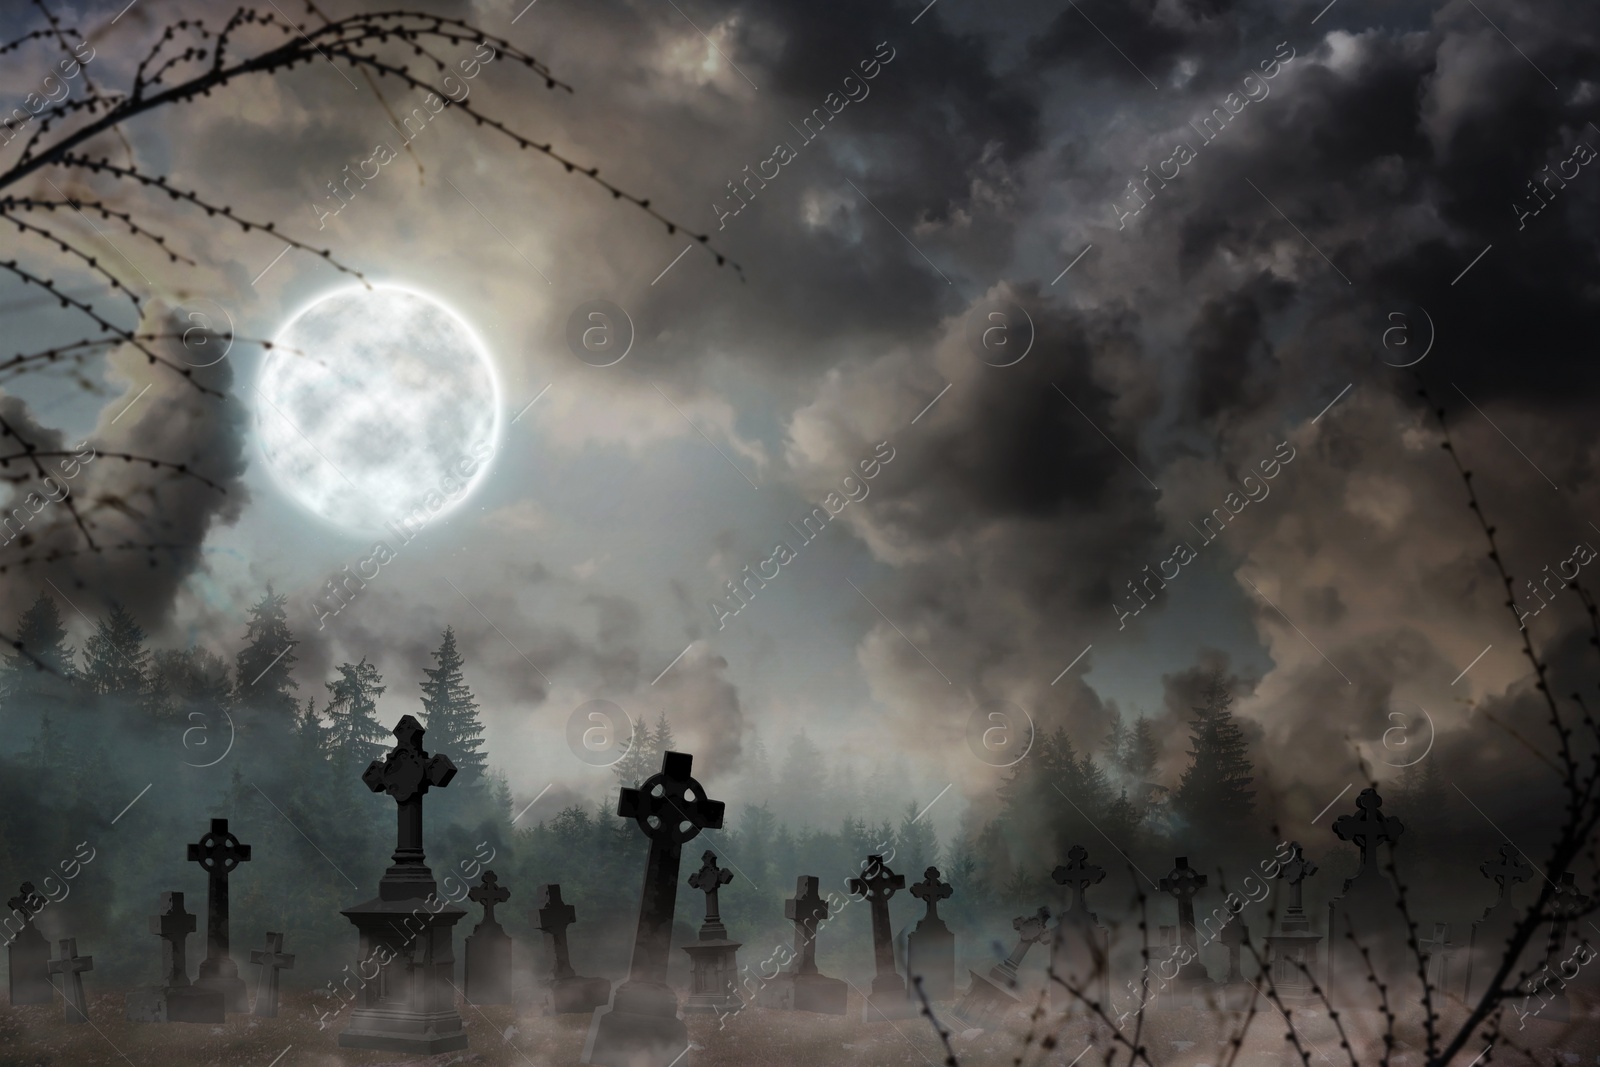 Image of Misty graveyard with old creepy headstones under full moon on Halloweeen